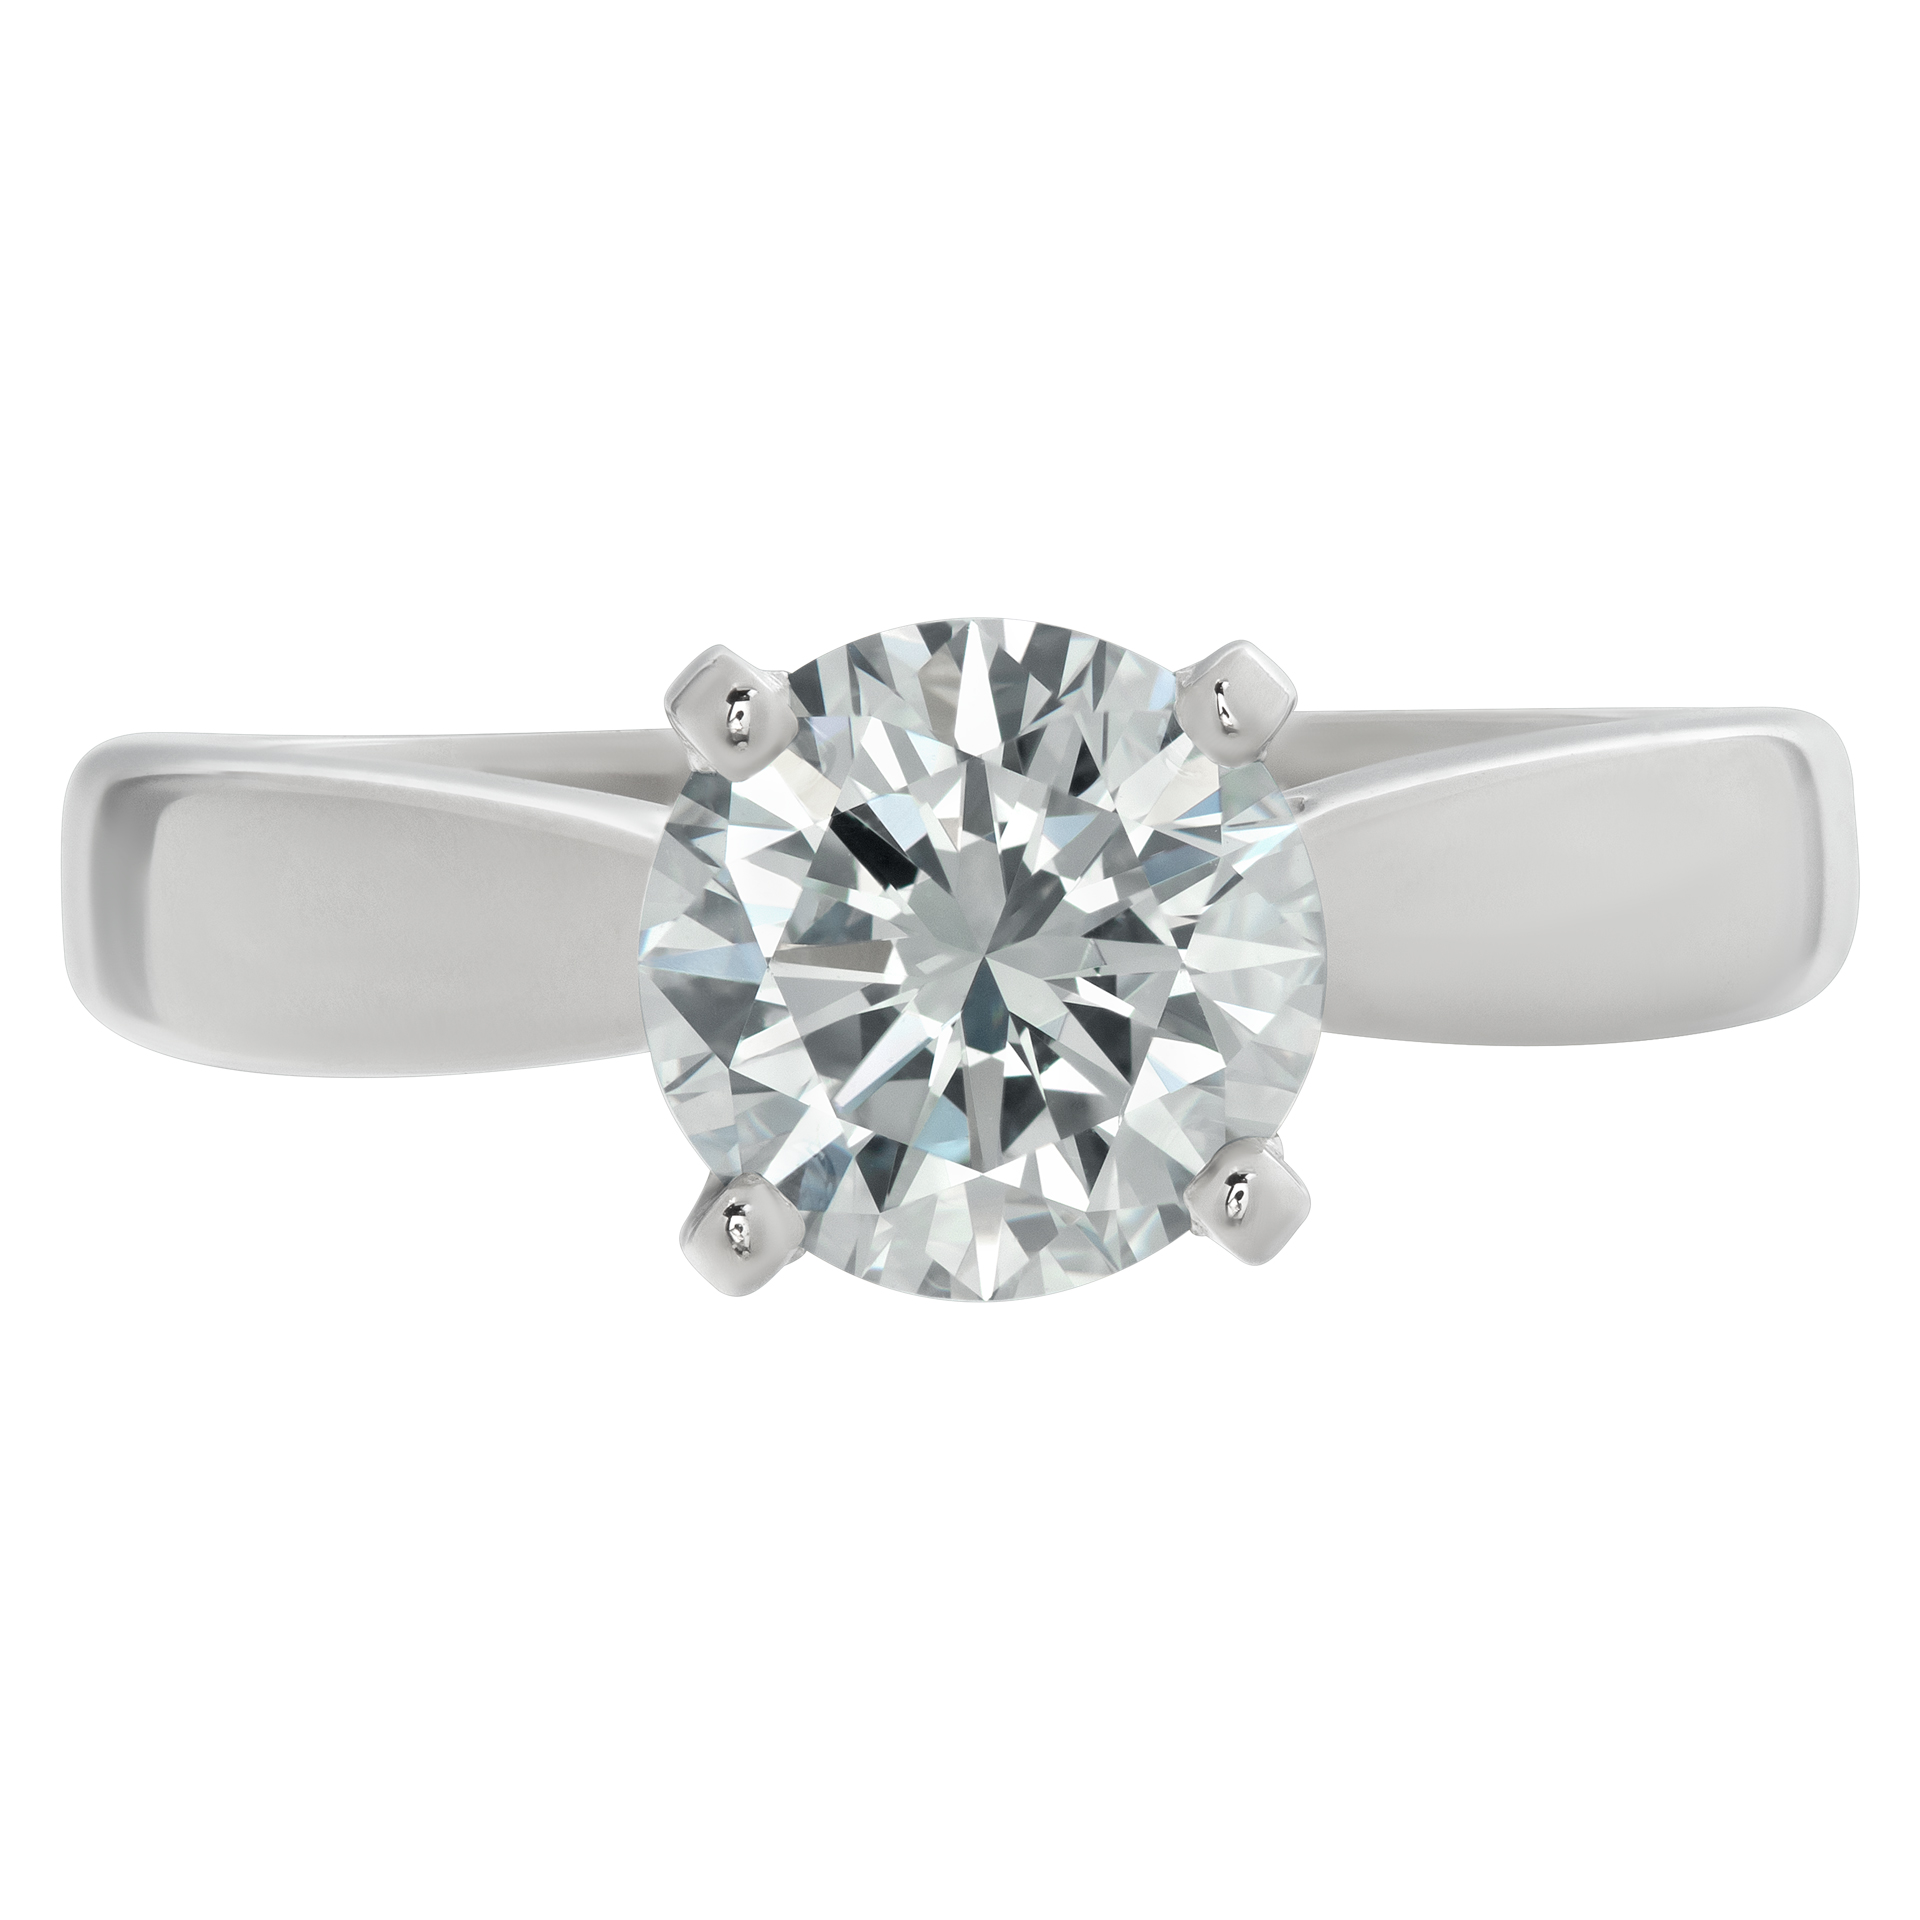 GIA certified round brilliant cut 1.78 carat diamond (I color, VS1 clarity) ring image 2